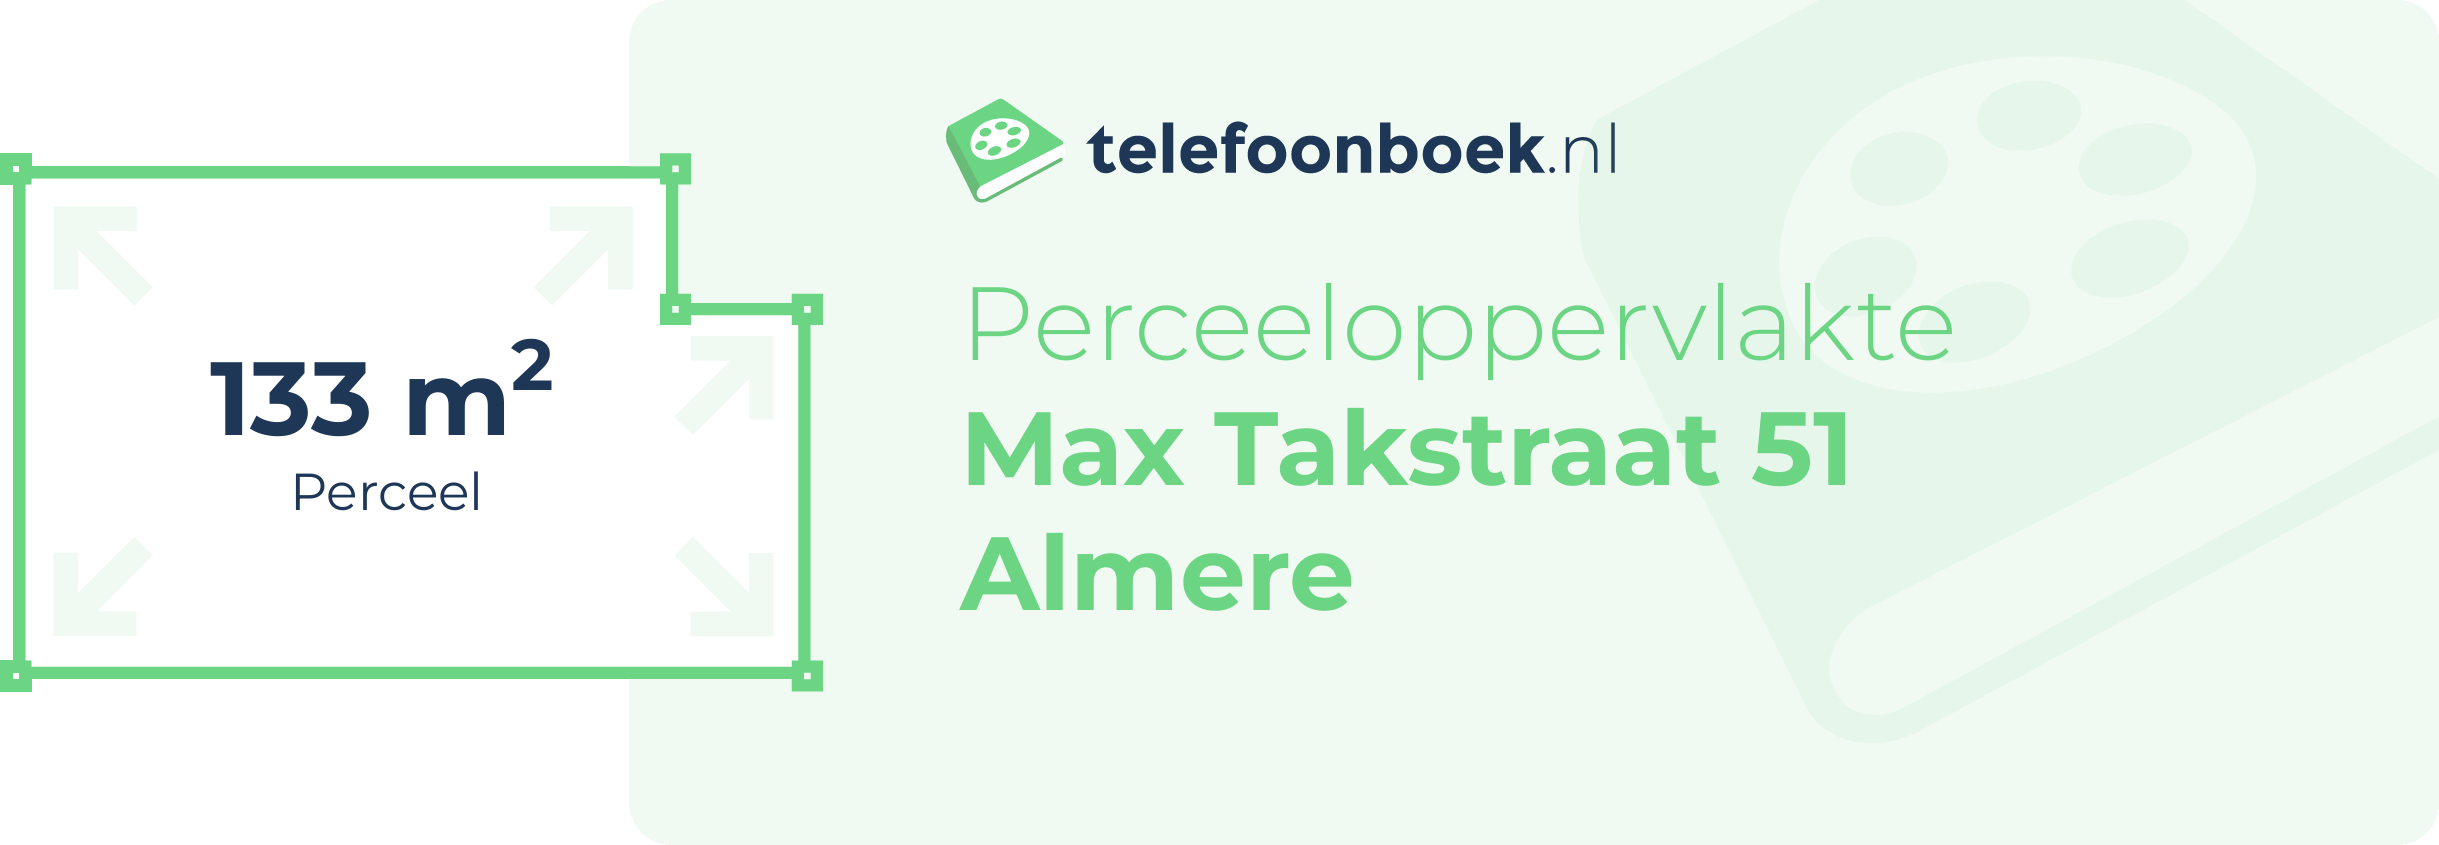 Perceeloppervlakte Max Takstraat 51 Almere